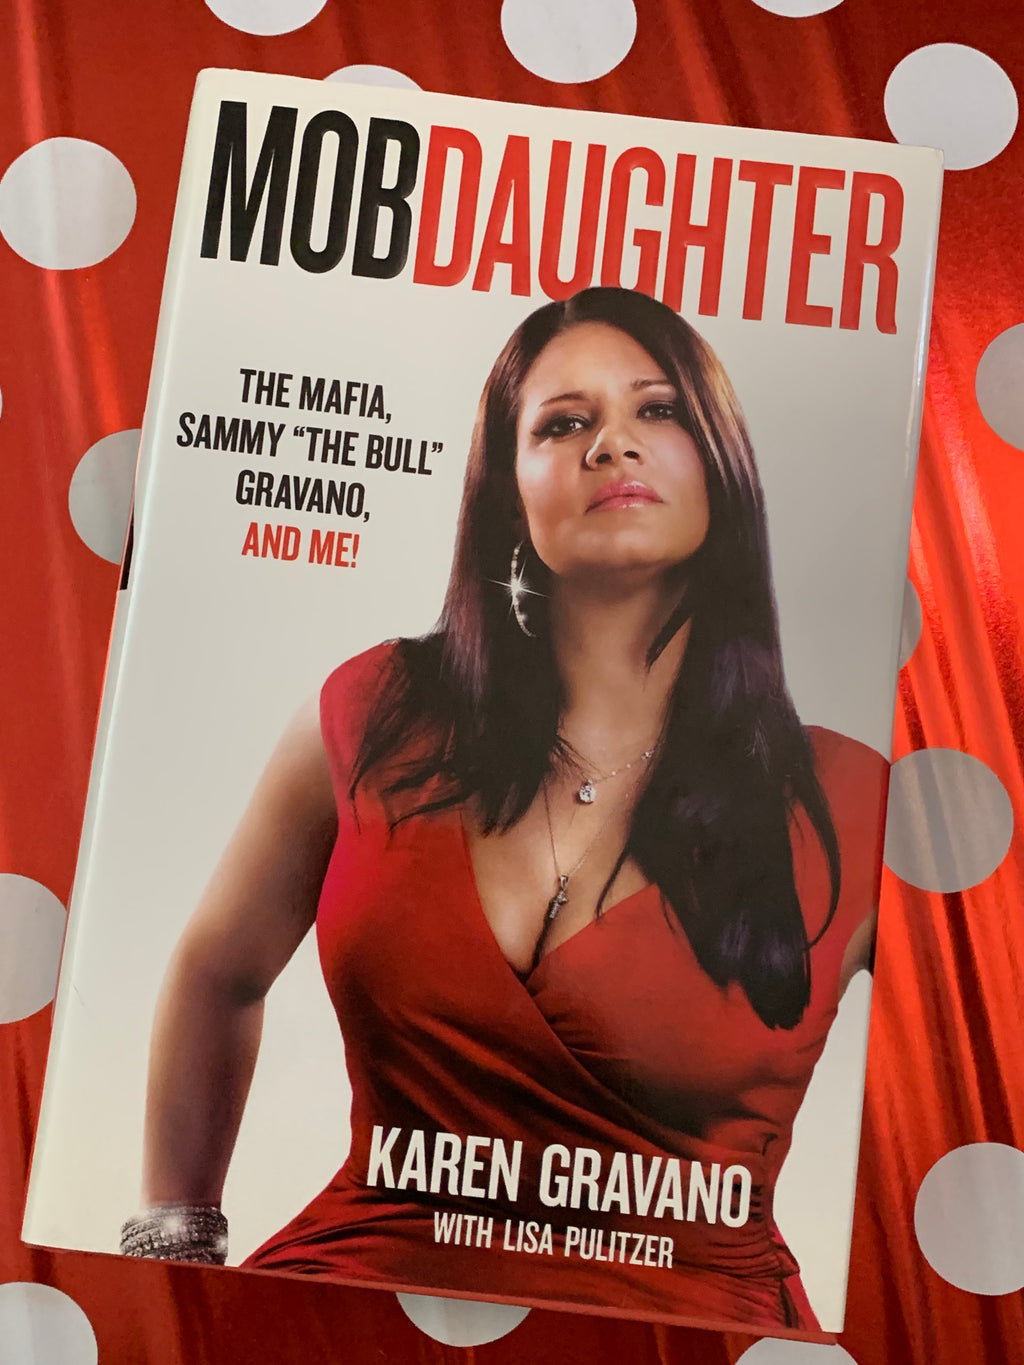 Mob Daughter: The Mafia, Sammy "The Bull" Gravano, and Me!- By Karen Gravano